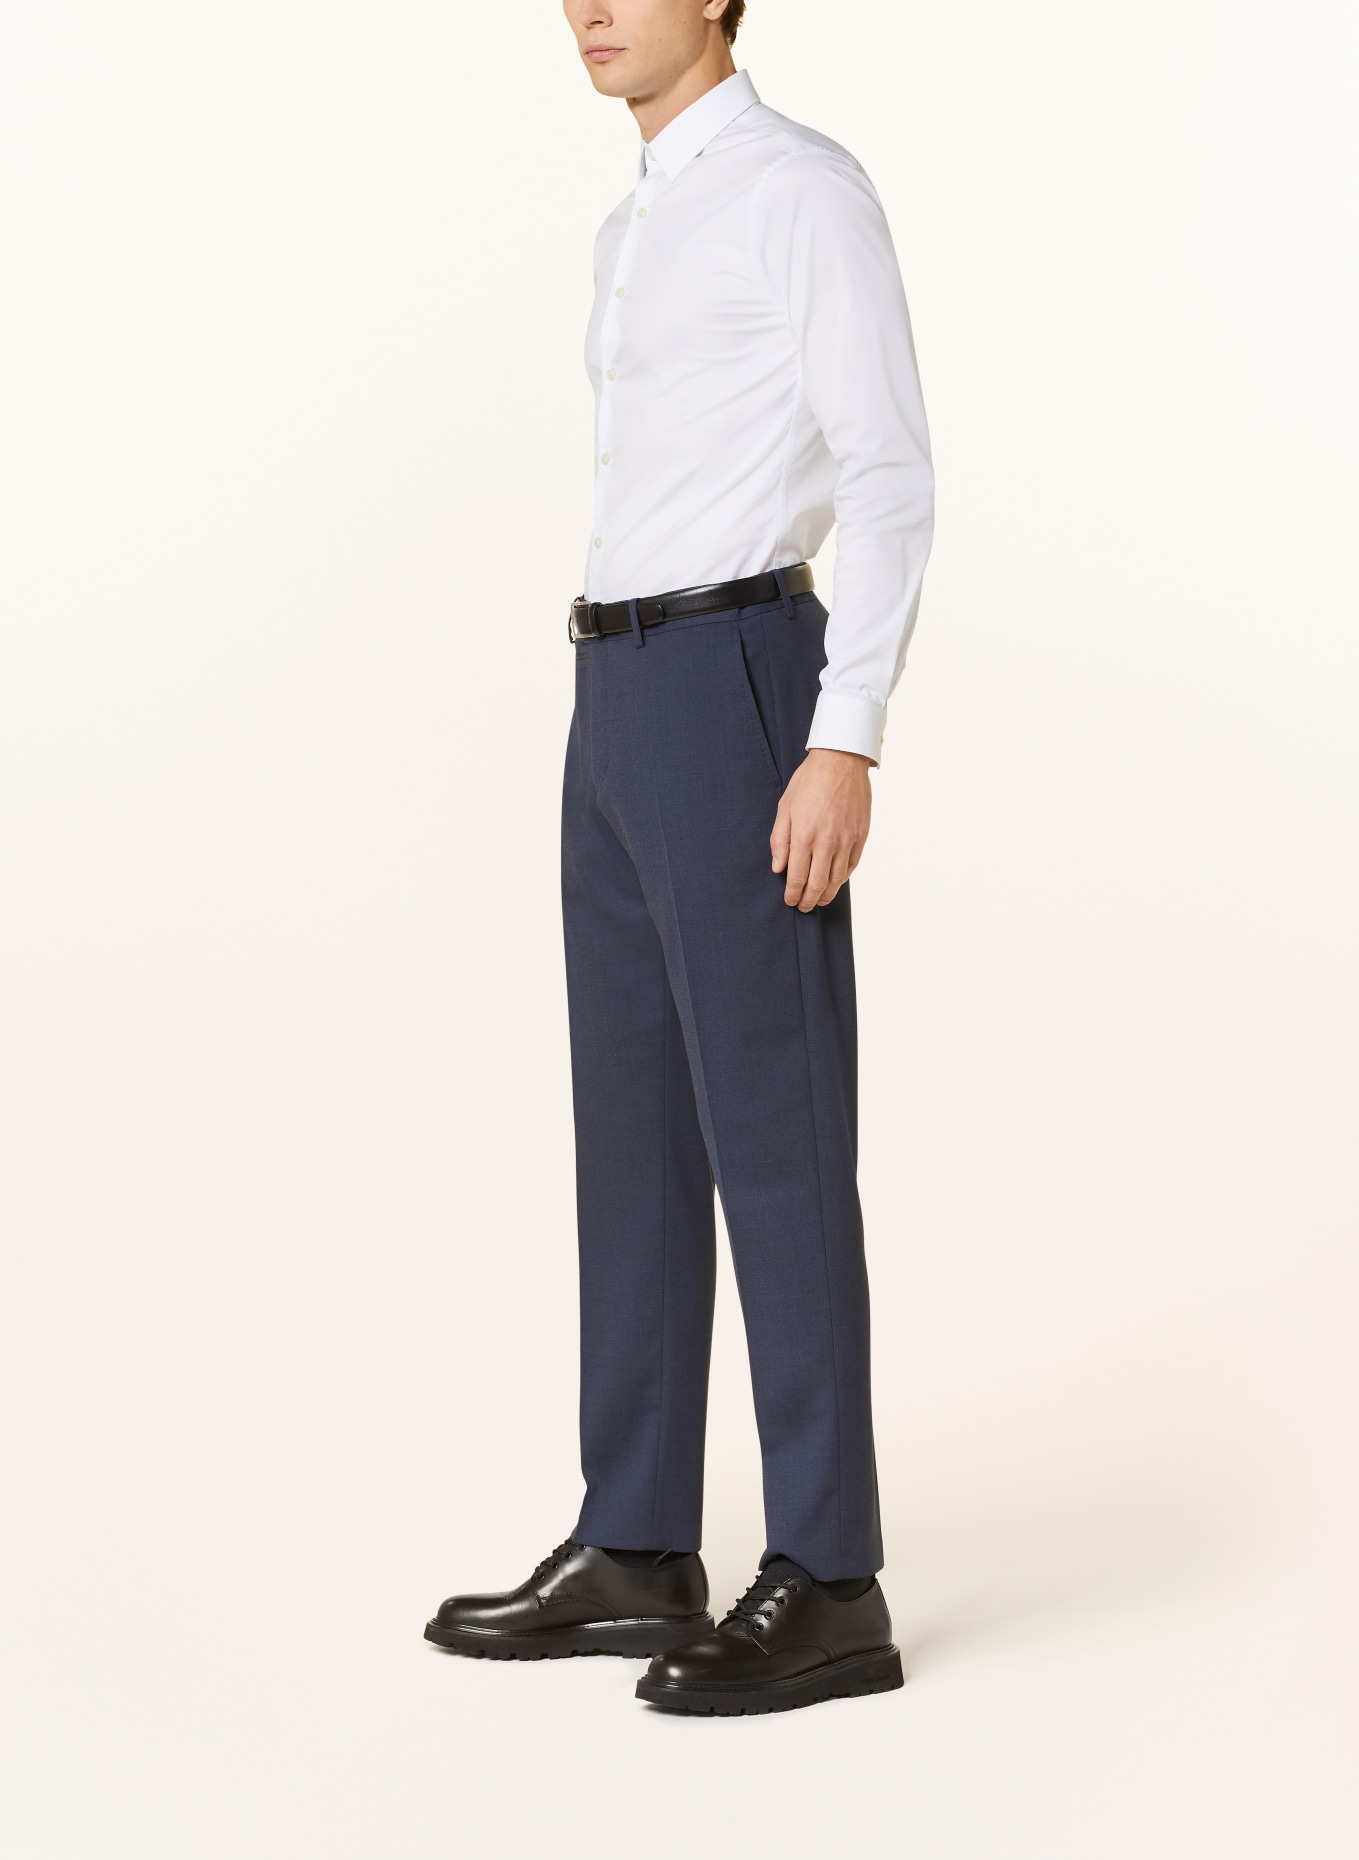 TIGER OF SWEDEN Suit trousers TENSE regular fit, Color: 231 Dusty blue (Image 5)